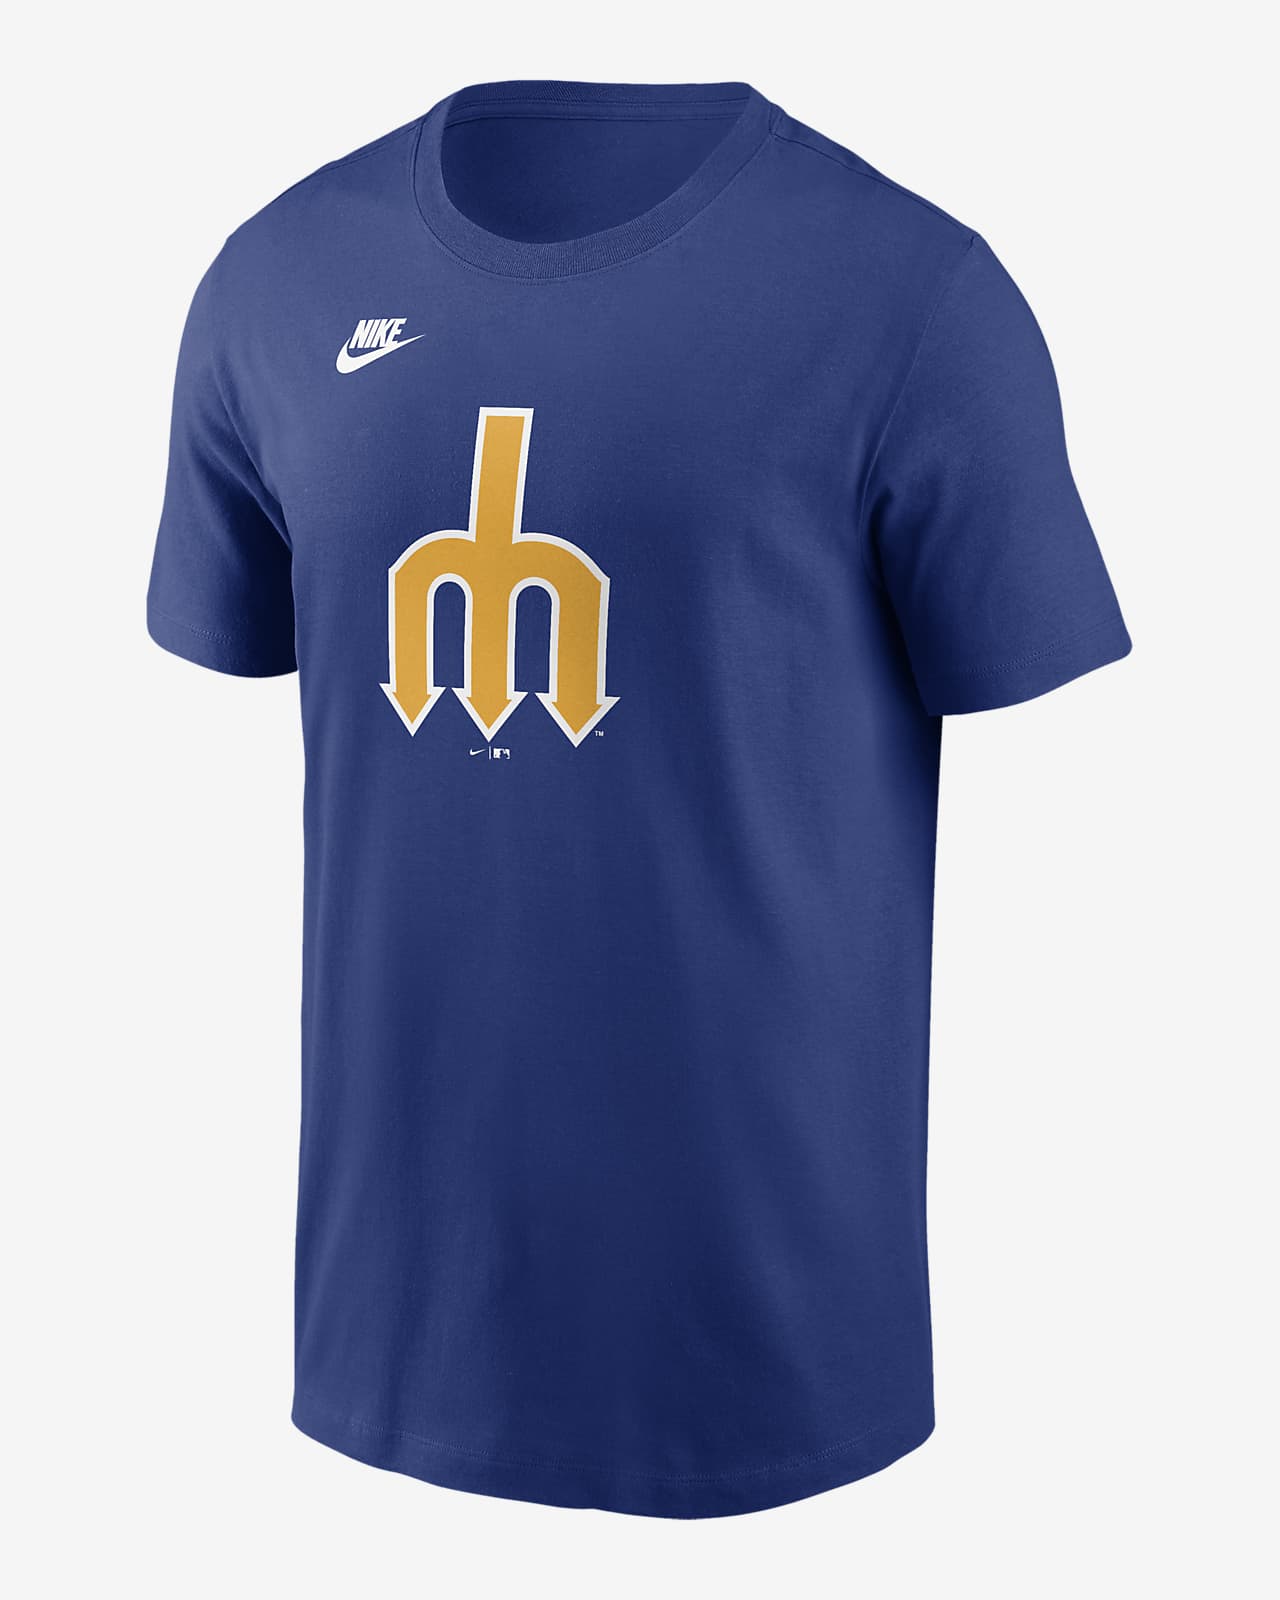 Playera Nike de la MLB para hombre Seattle Mariners Cooperstown Logo